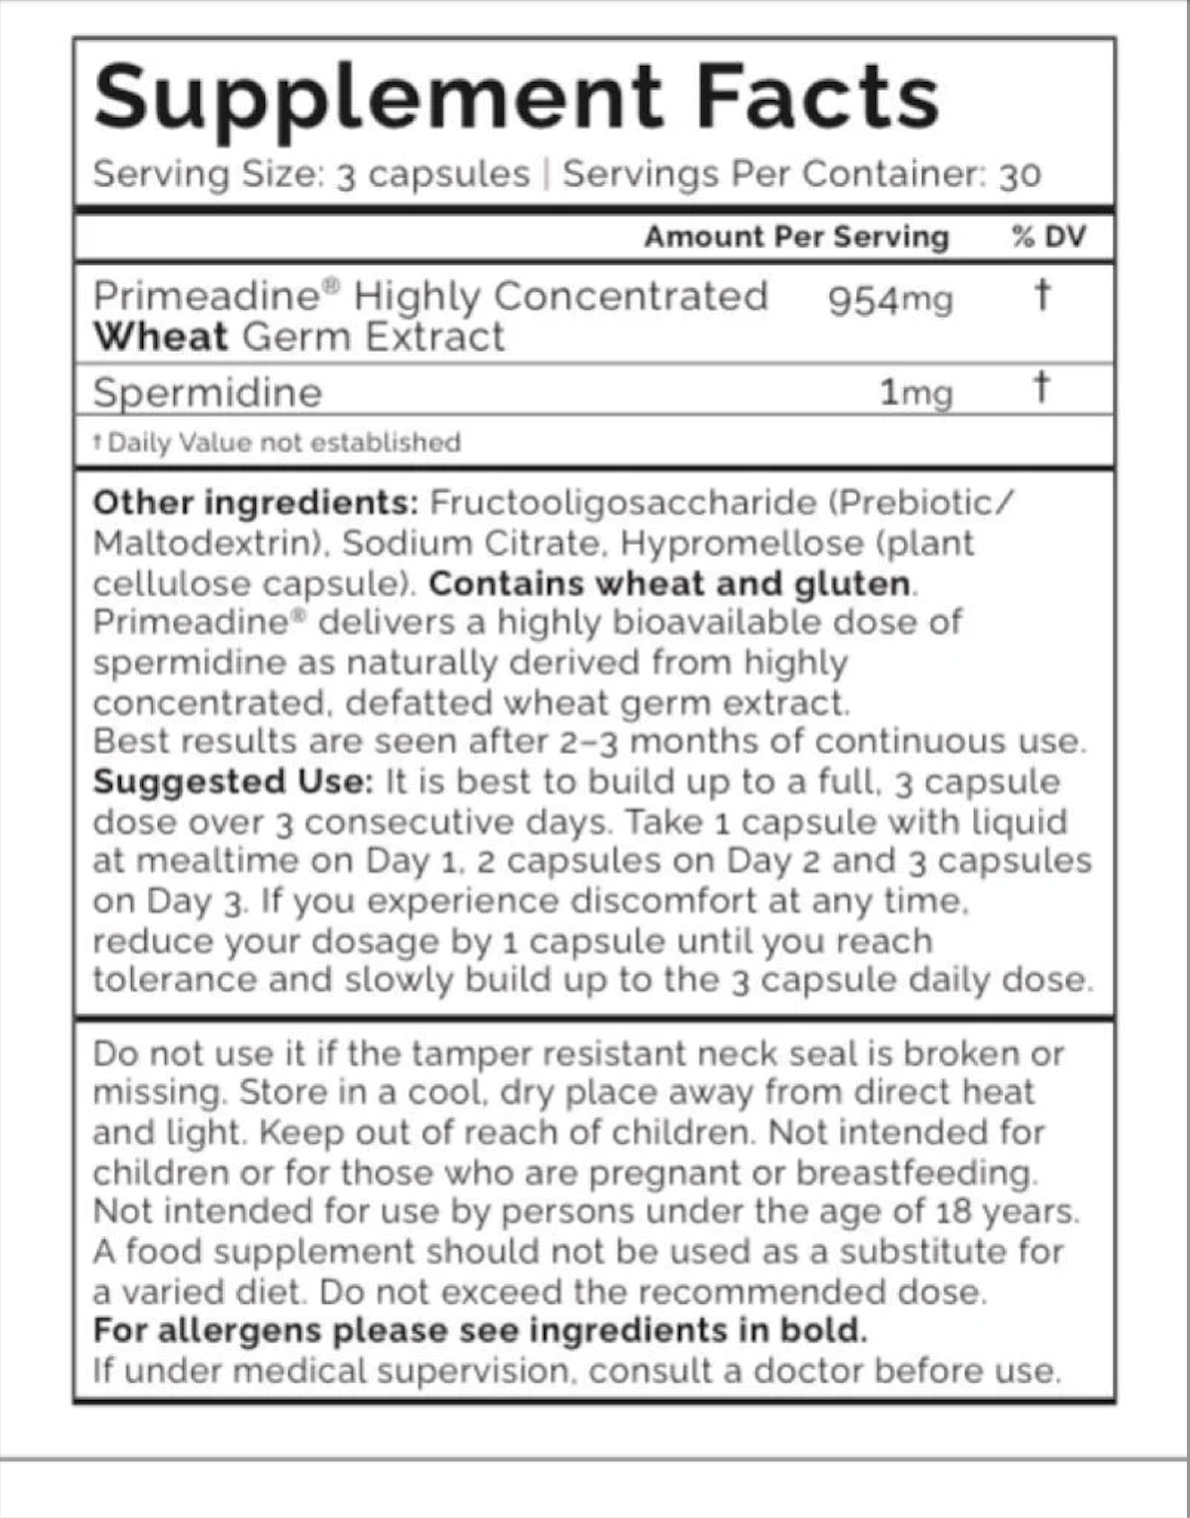 Primeadine® Original & GF Spermidine Supplement Mixed - 6-Bottle Bundle / 180 Day Supply